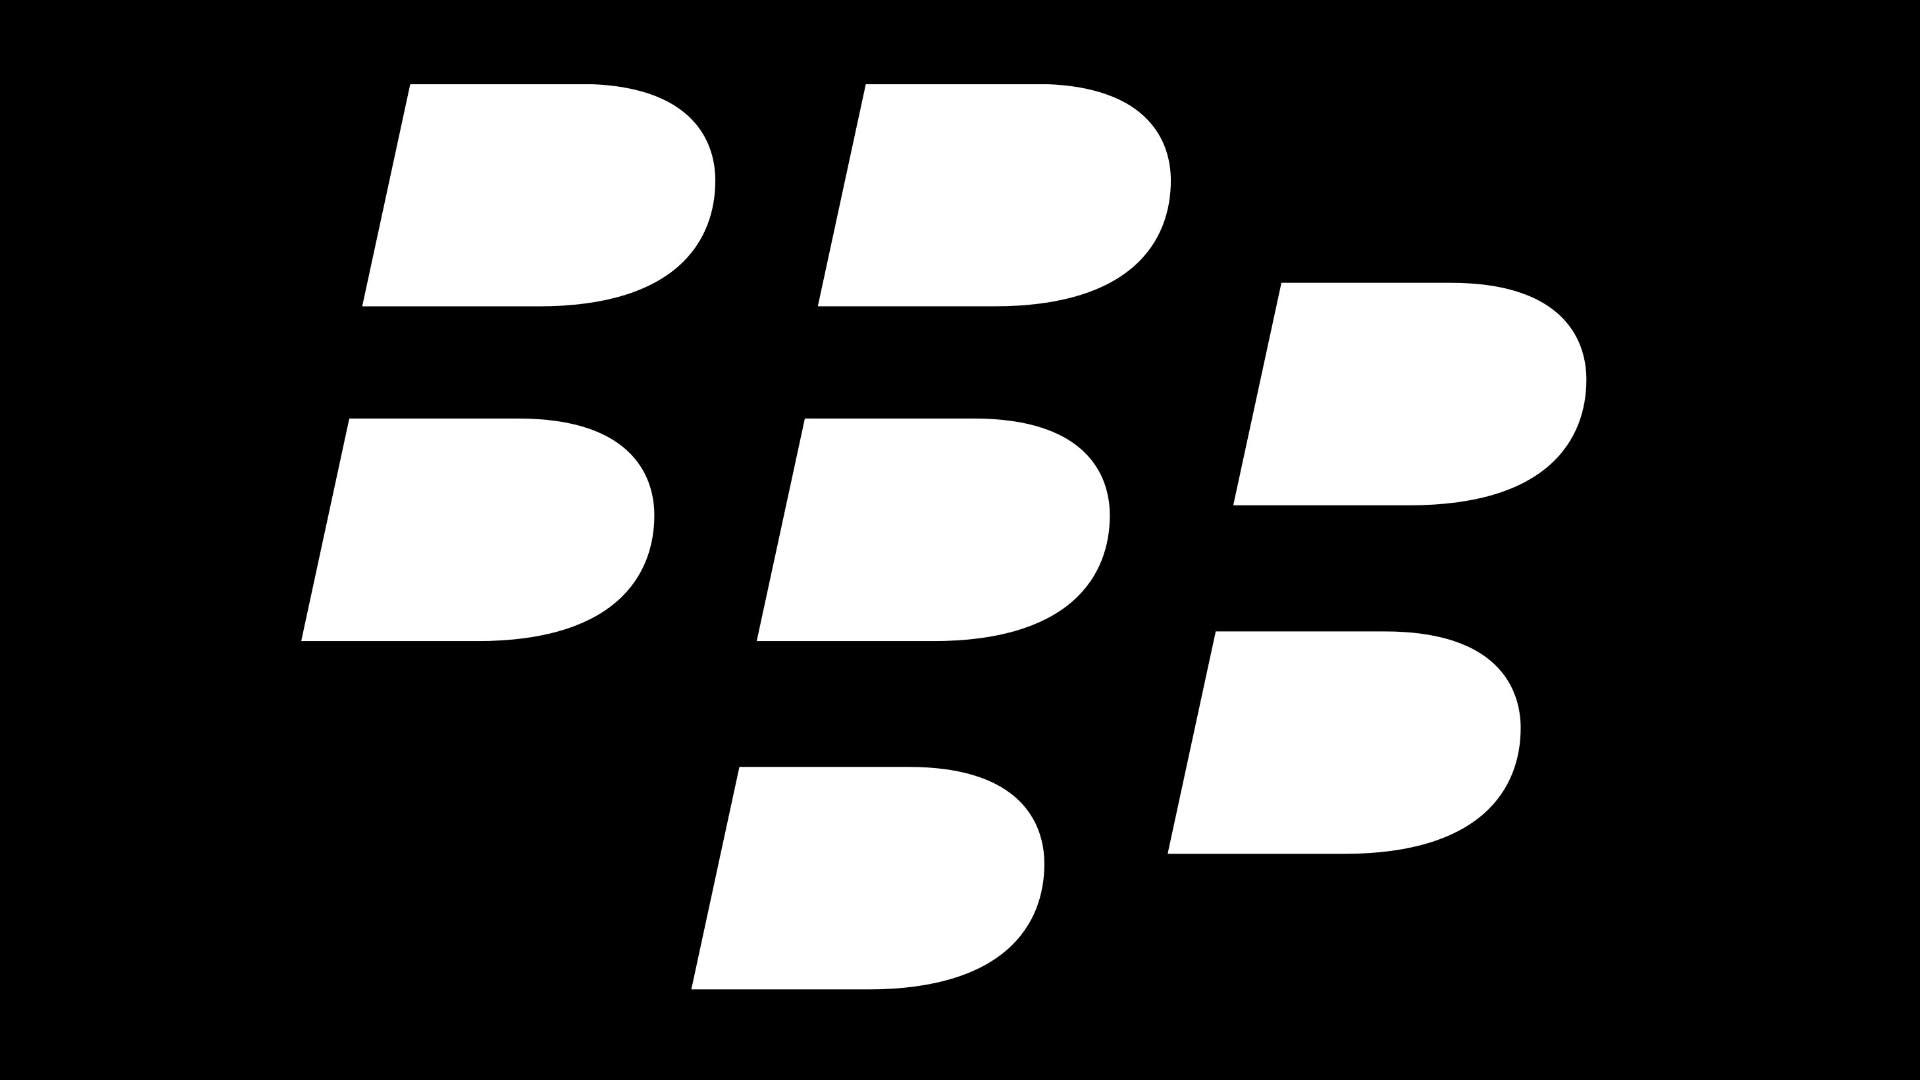 BlackBerry Logo - blackberry-logo-feat - Best Mobile Destination